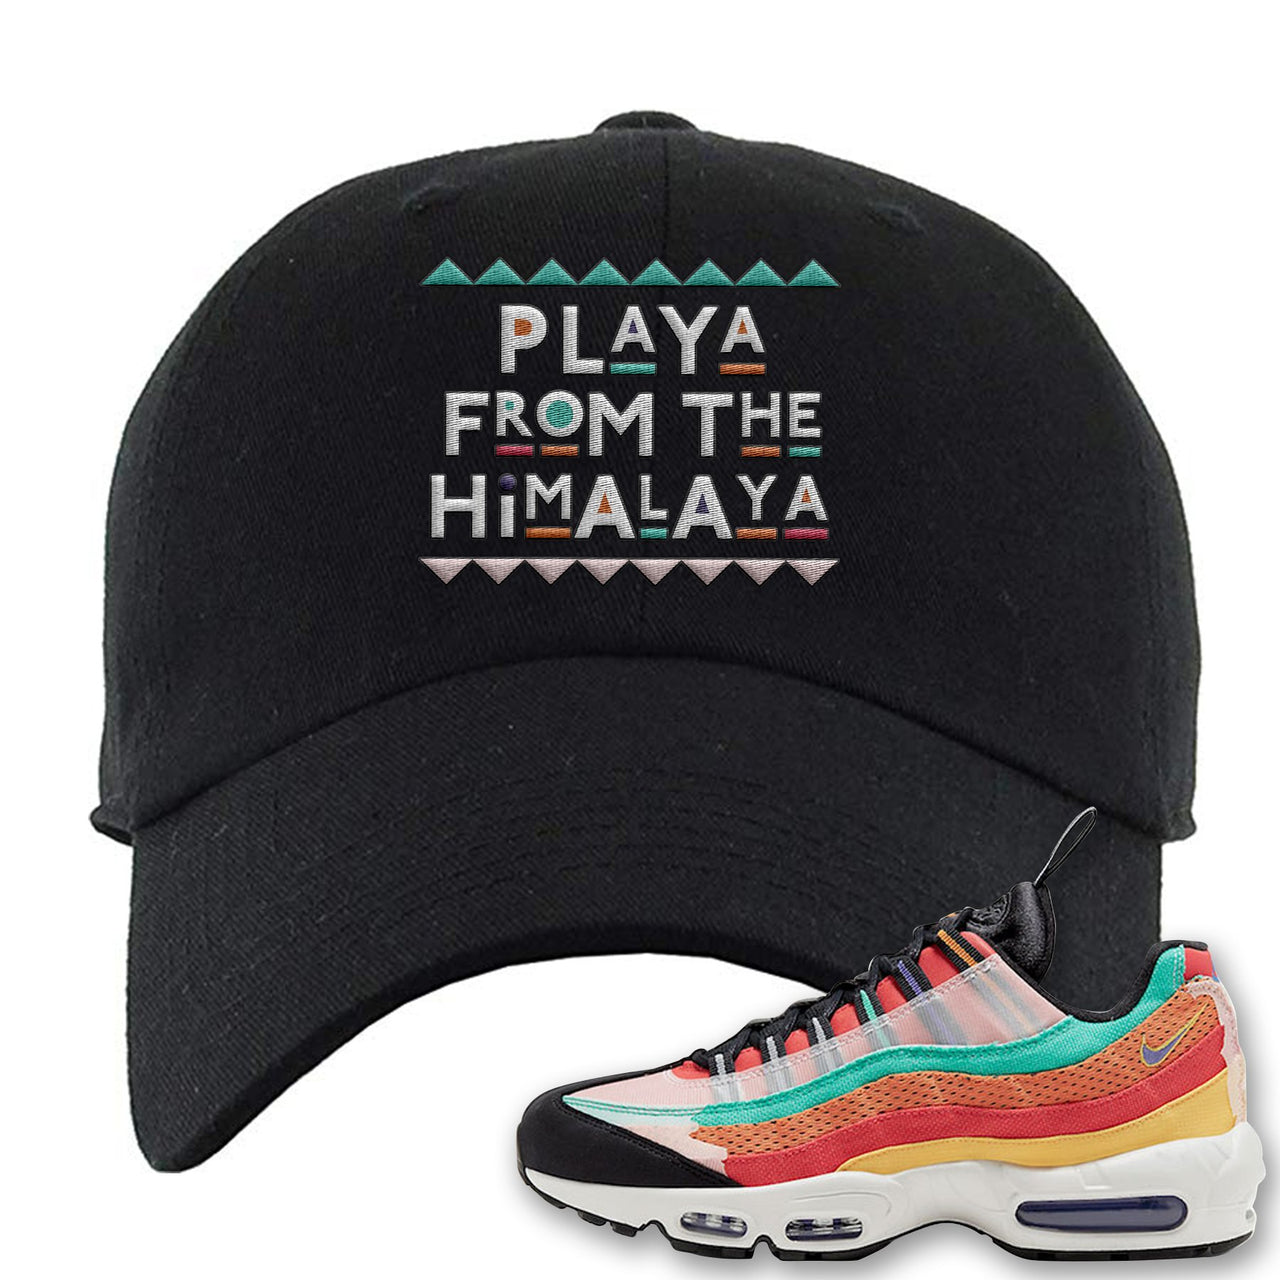 Air Max 95 Black History Month Sneaker Black Dad Hat | Hat to match Air Max 95 Black History Month Shoes | Playa From The Himalaya